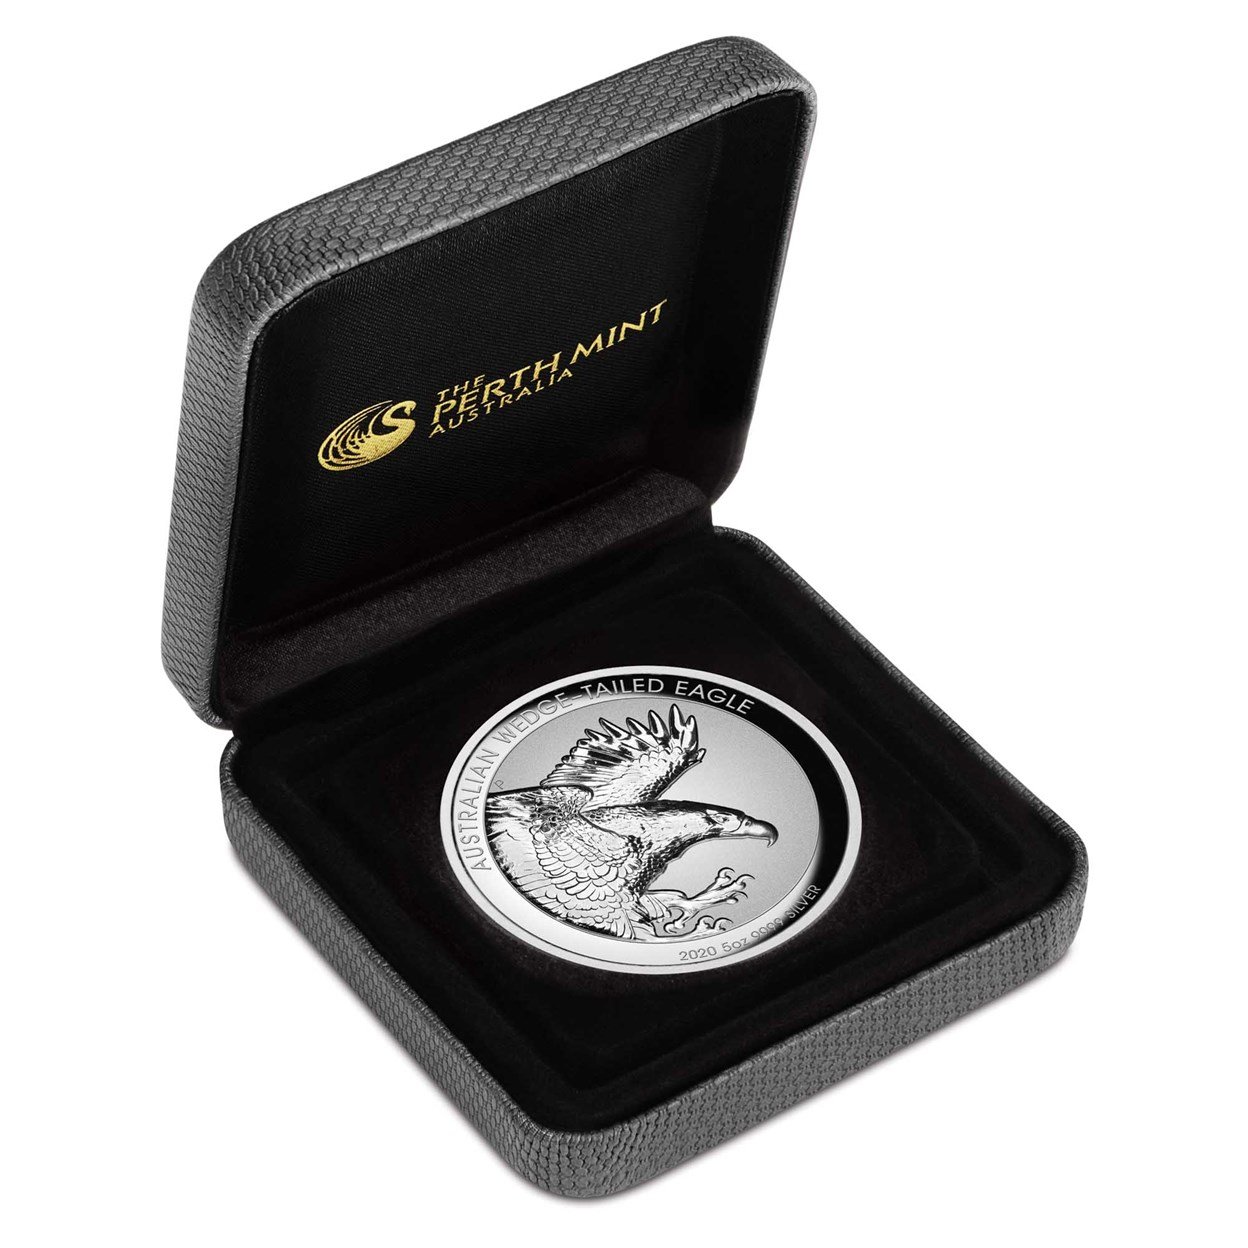 04 2020AustralianWedge TailedEagle 5oz Silver Proof HighRelief Coin InCase HighRes